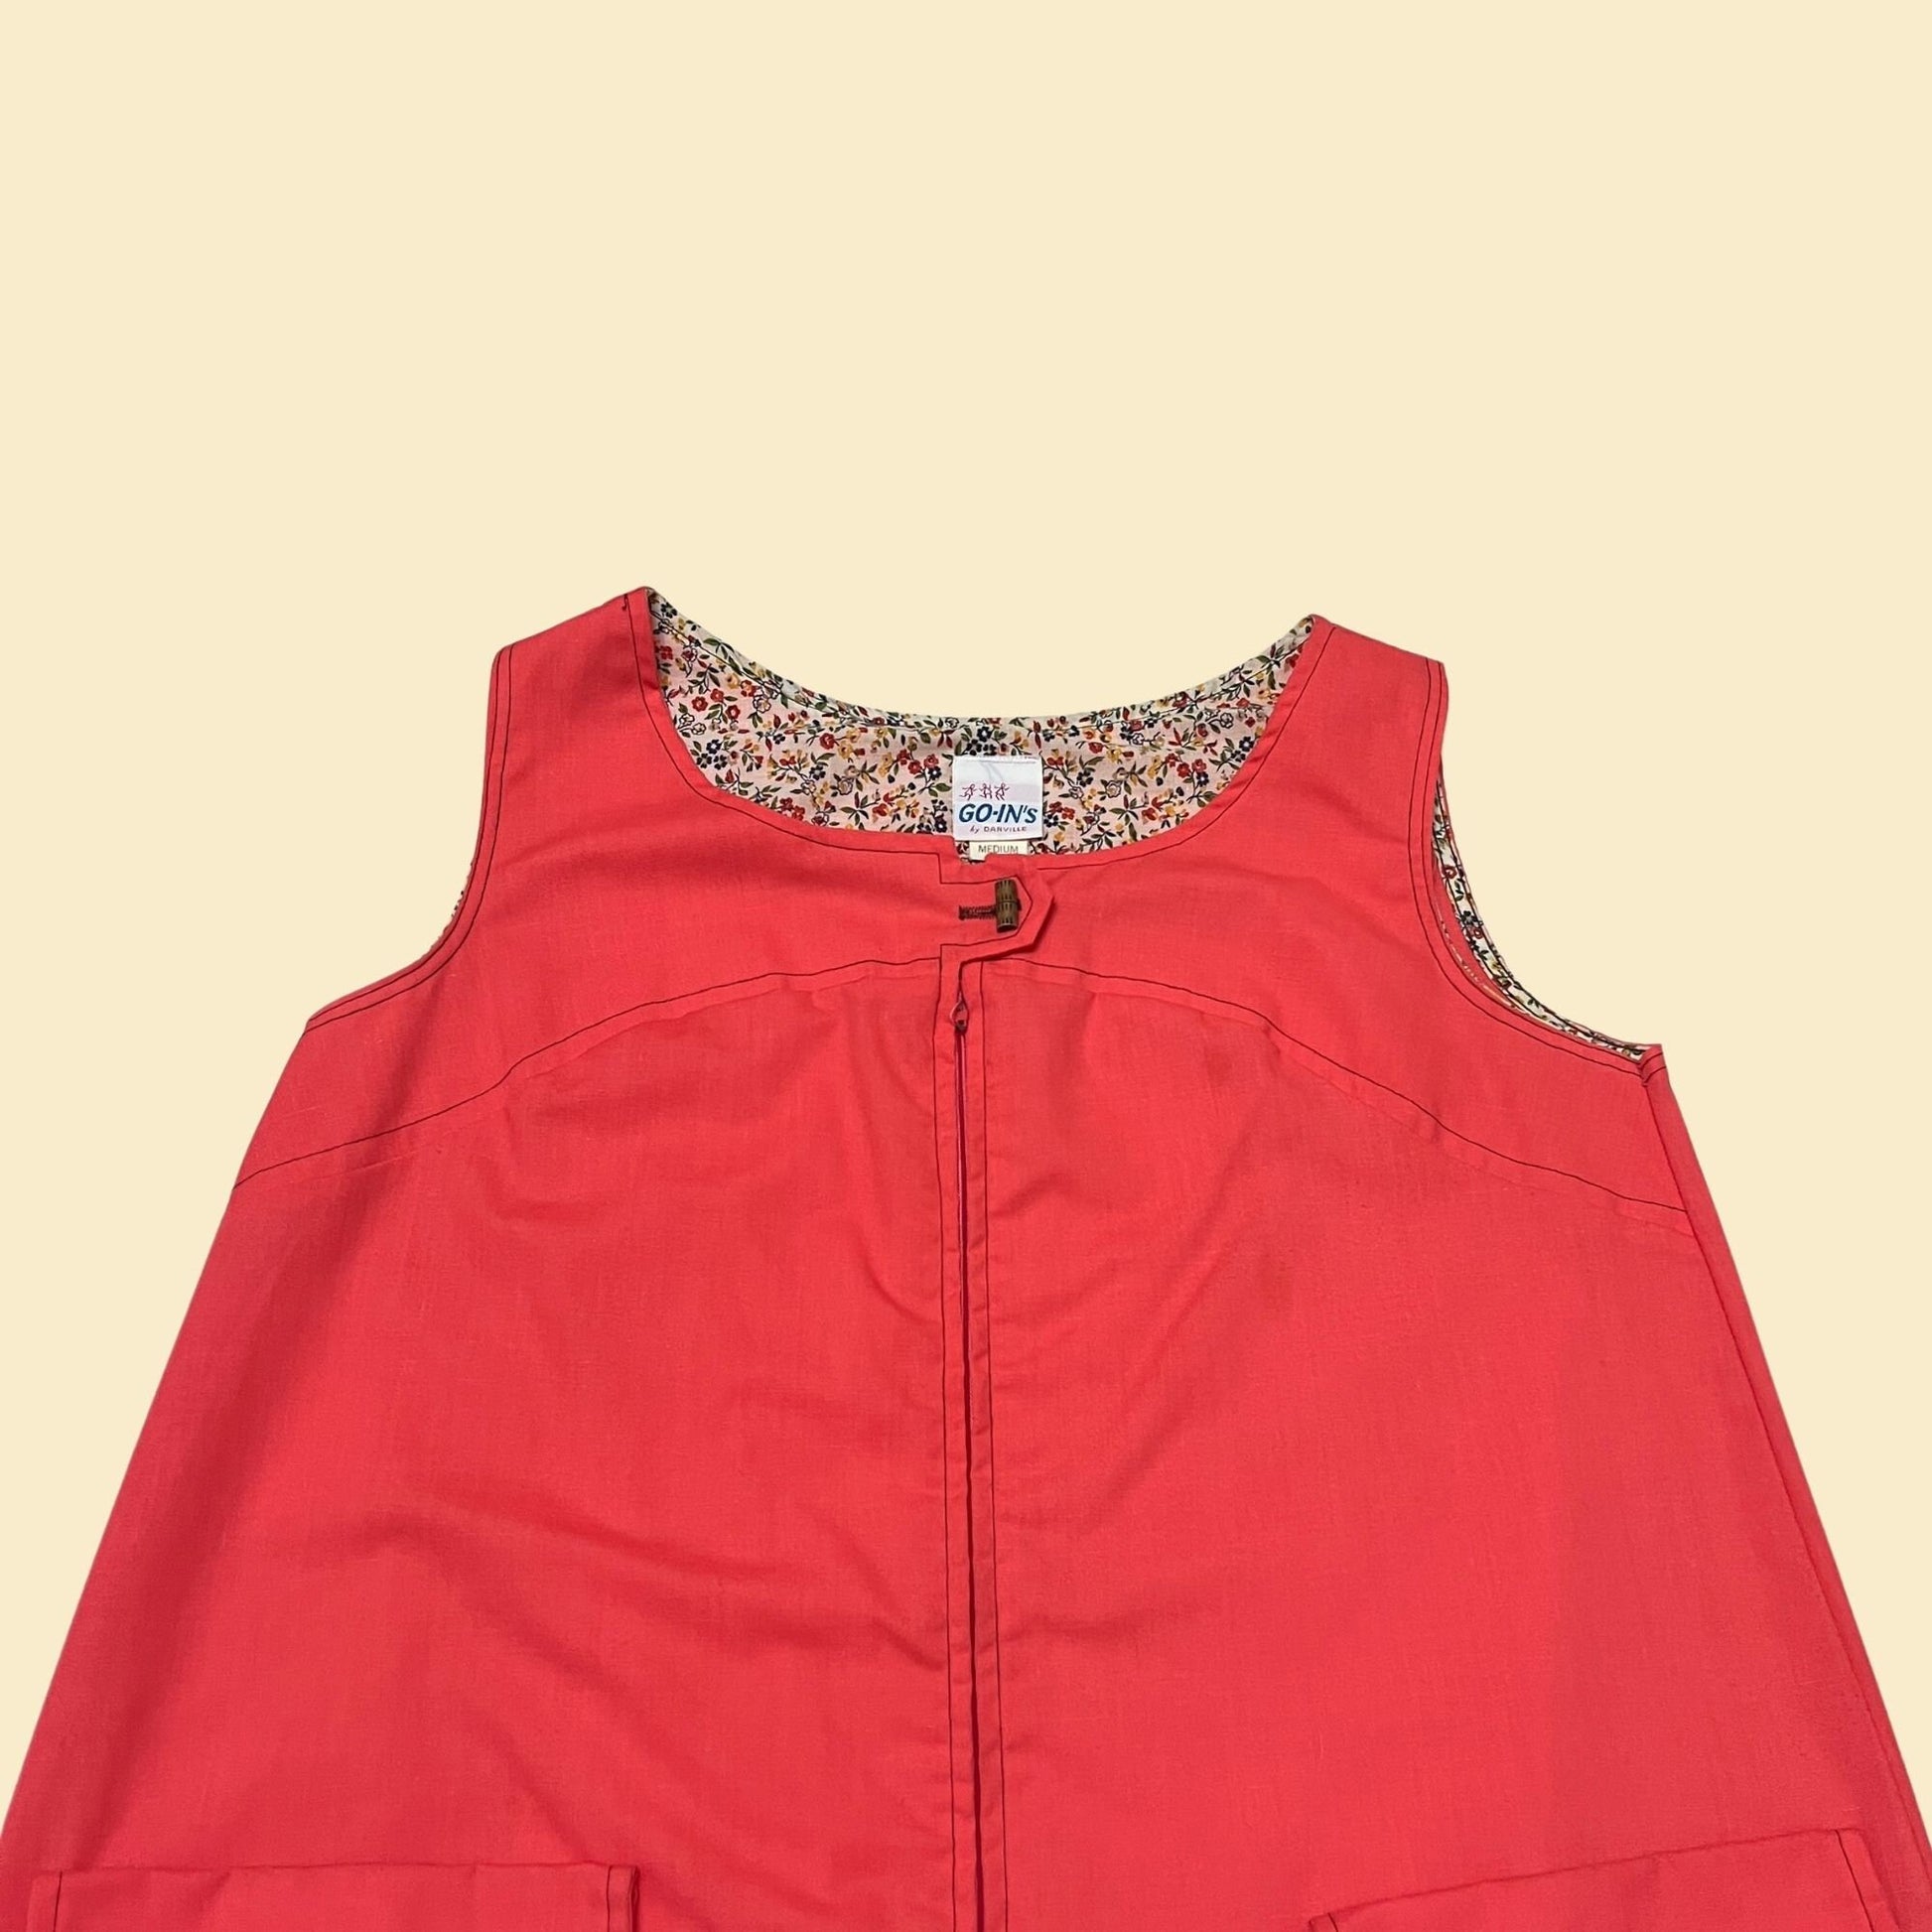 70s pink dress with front zipper and pockets, size medium 1970s women's shift dress, vintage sleeveless midi / knee length dress